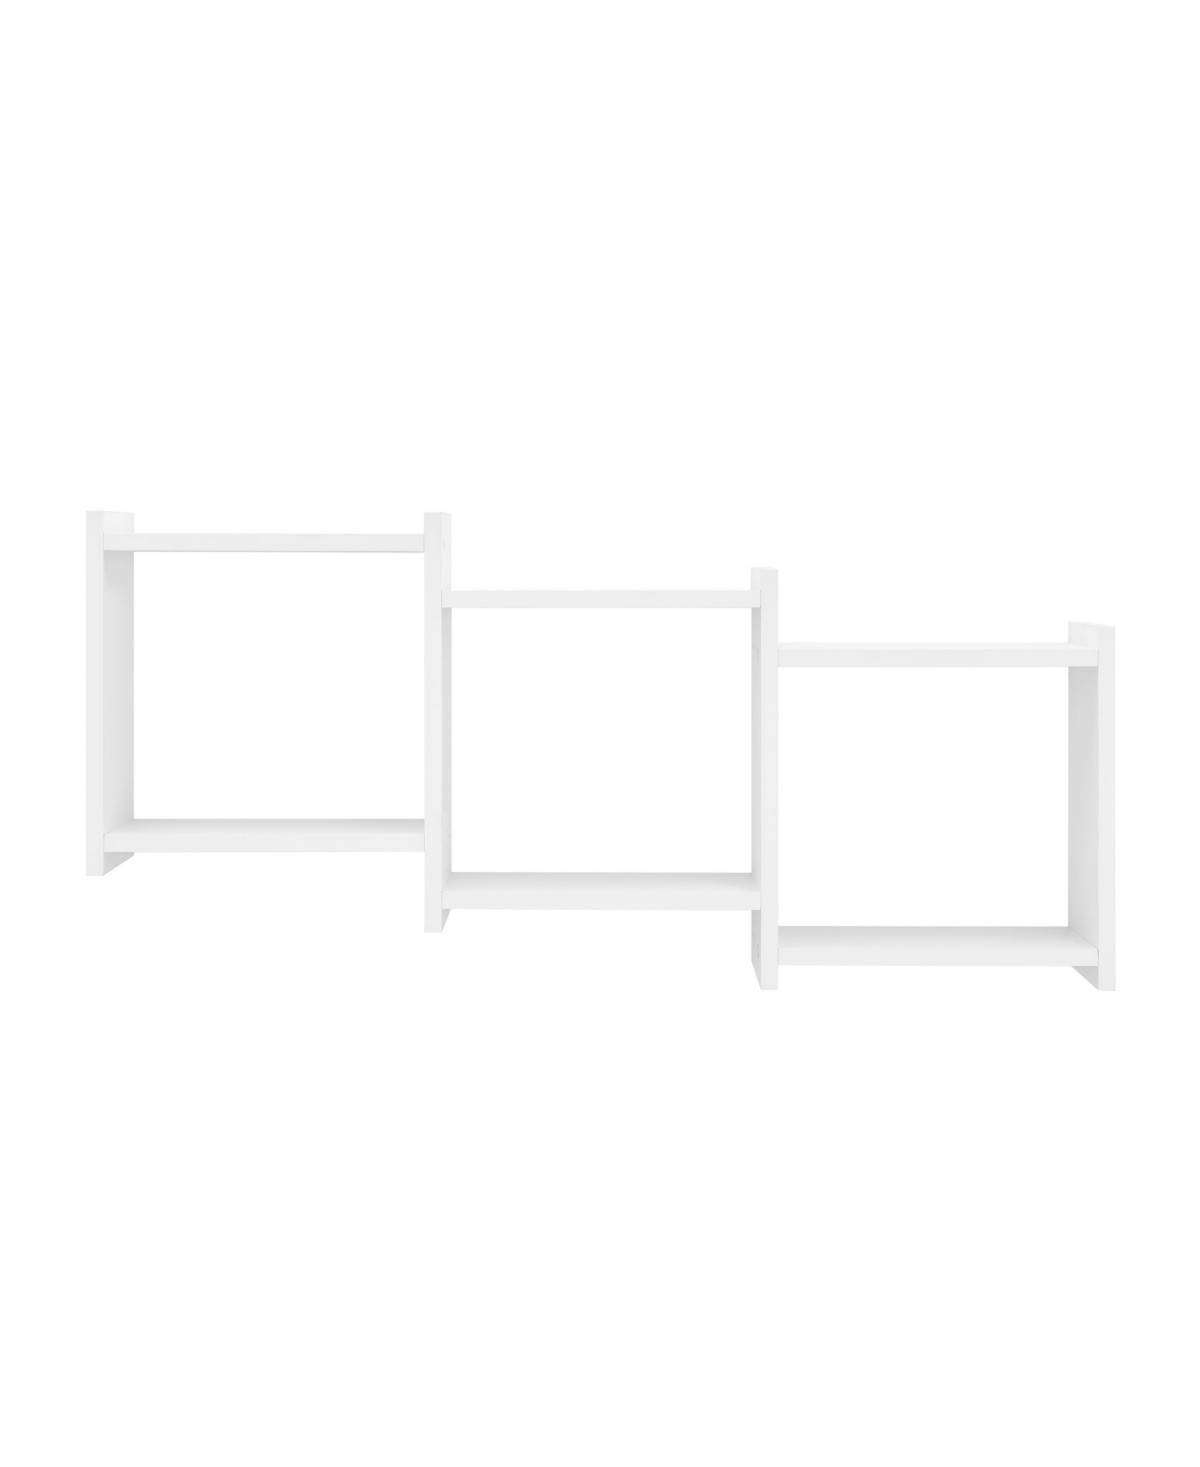 3-Cube Floating Decorative organizer Wall Shelf with Ledges, Horizontal or Vertical Hanging Options - White